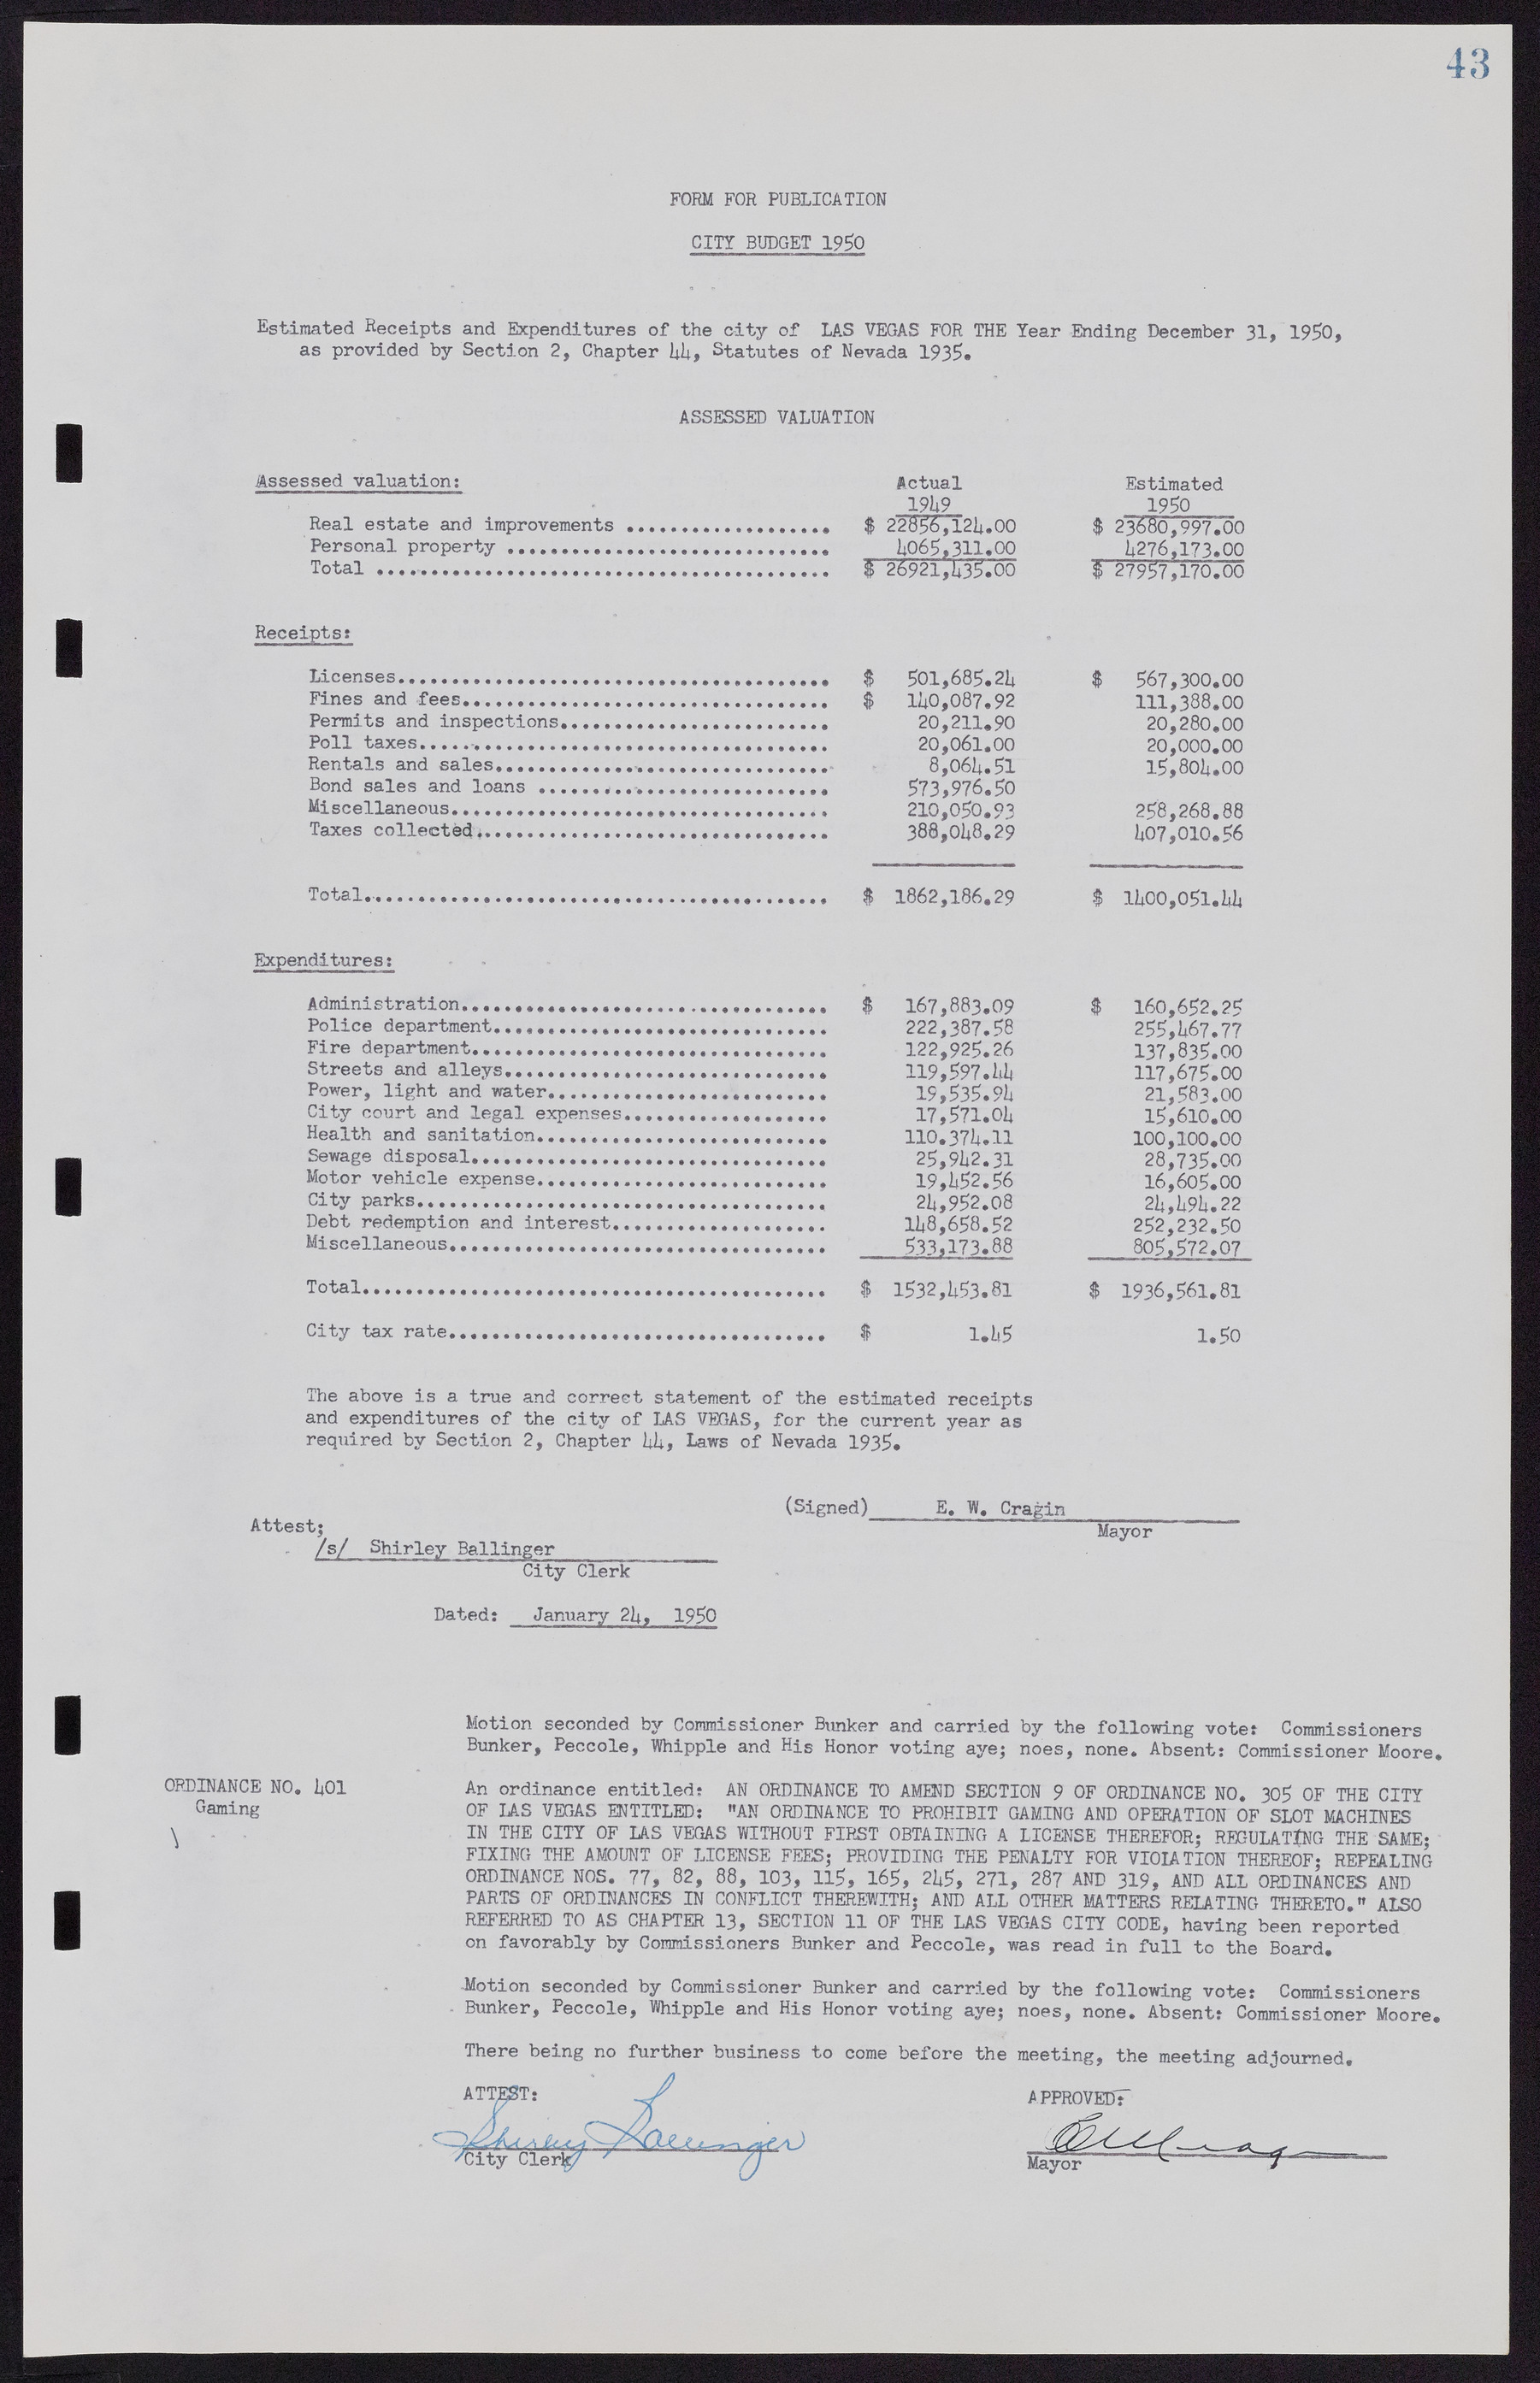 Las Vegas City Commission Minutes, November 7, 1949 to May 21, 1952, lvc000007-51